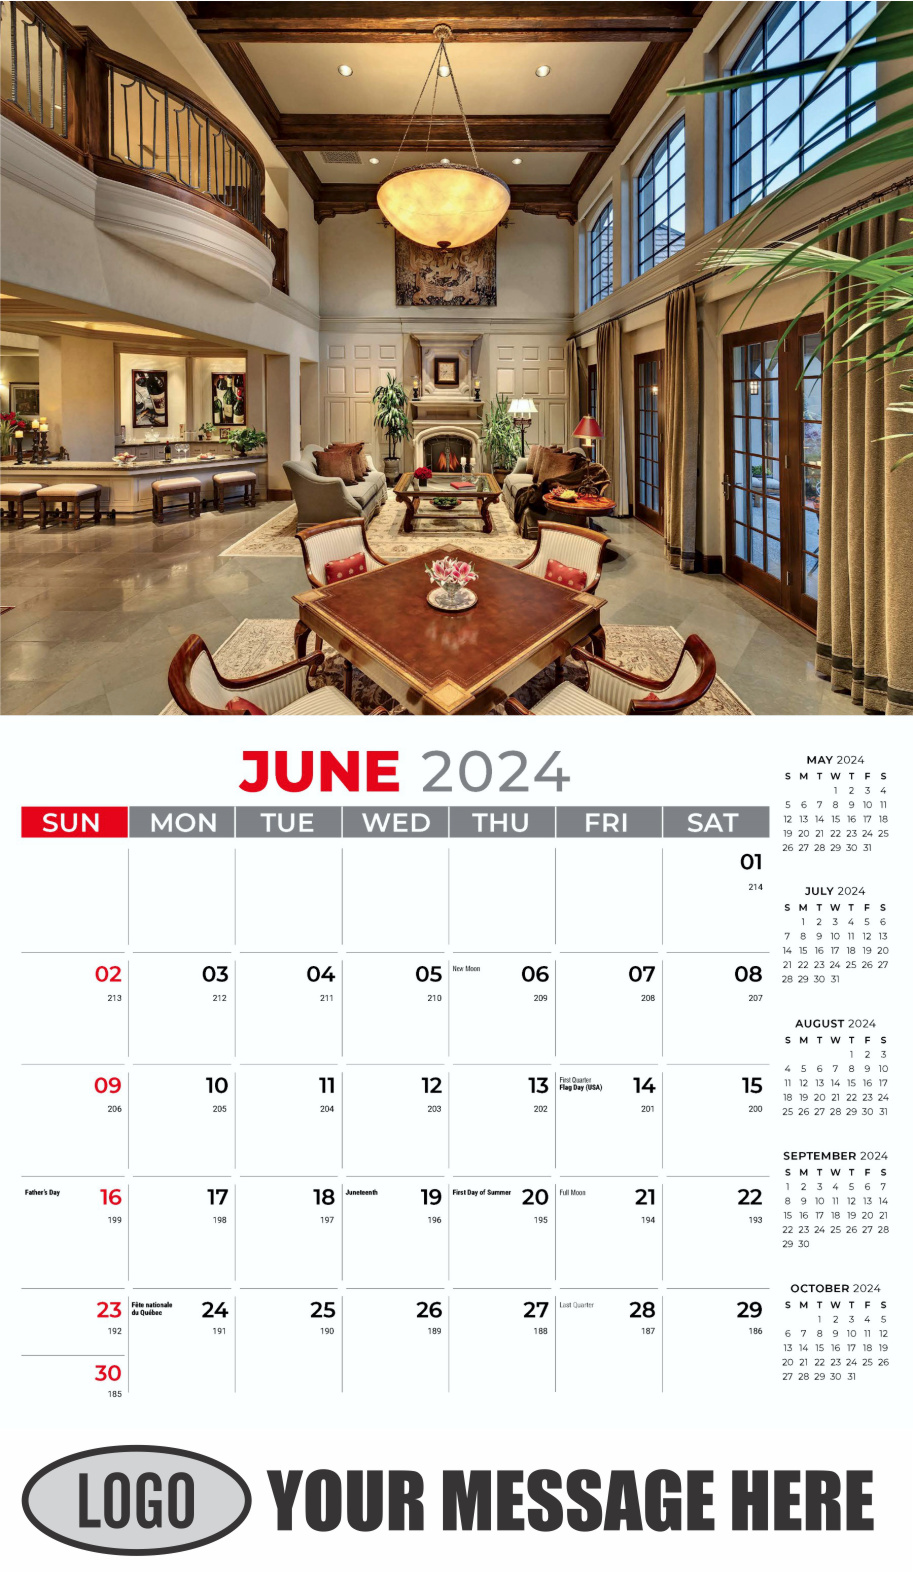 Decor and Design 2024 Interior Design Business Promotional Calendar - June